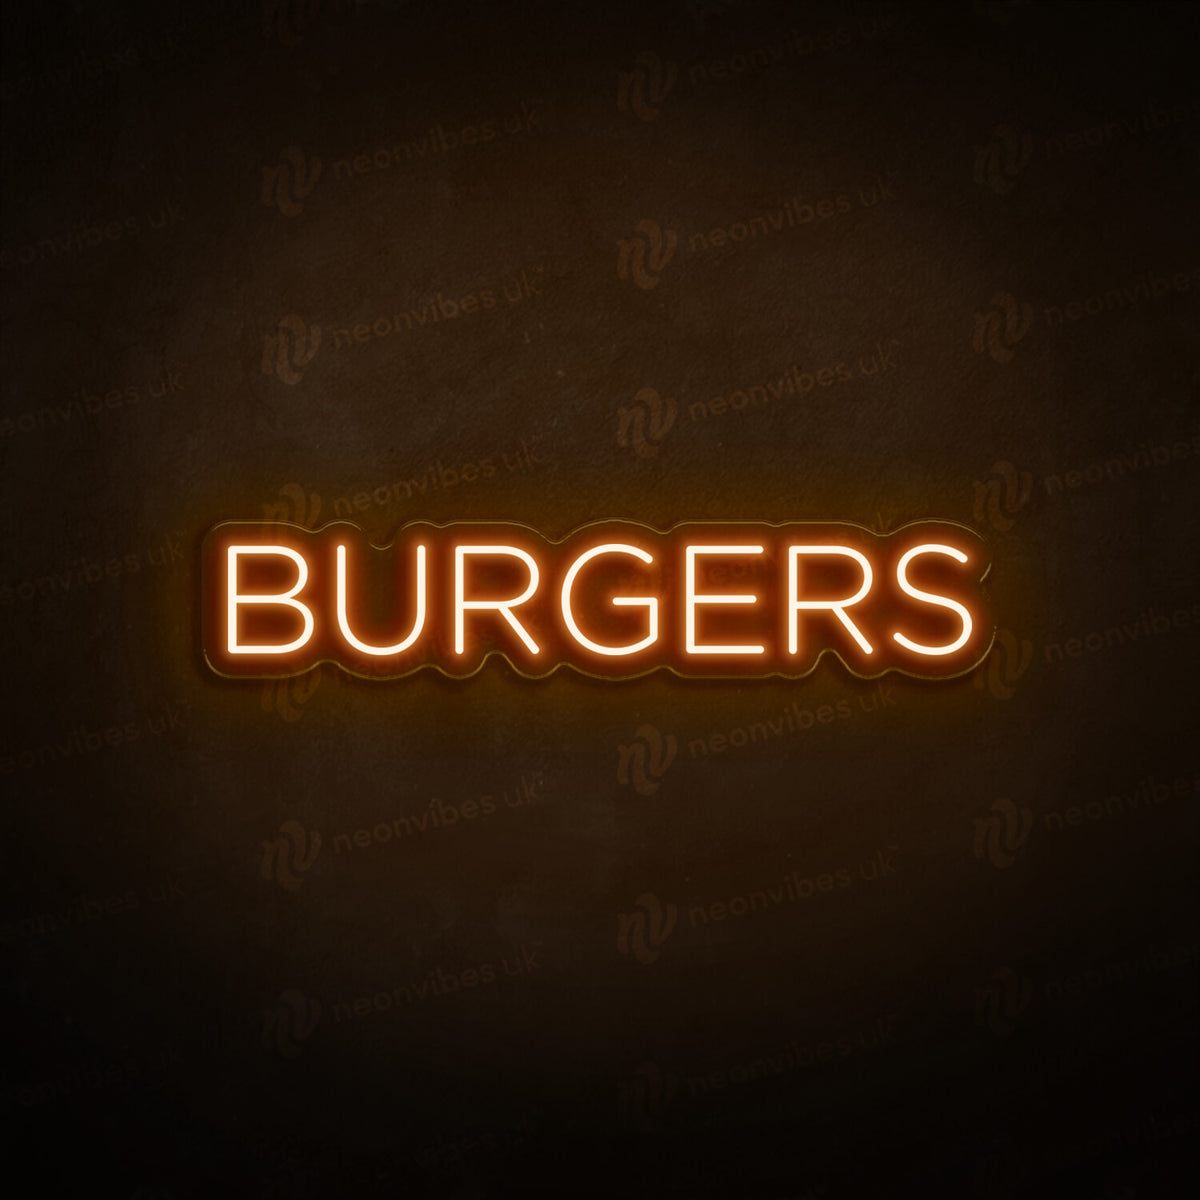 Burgers neon sign